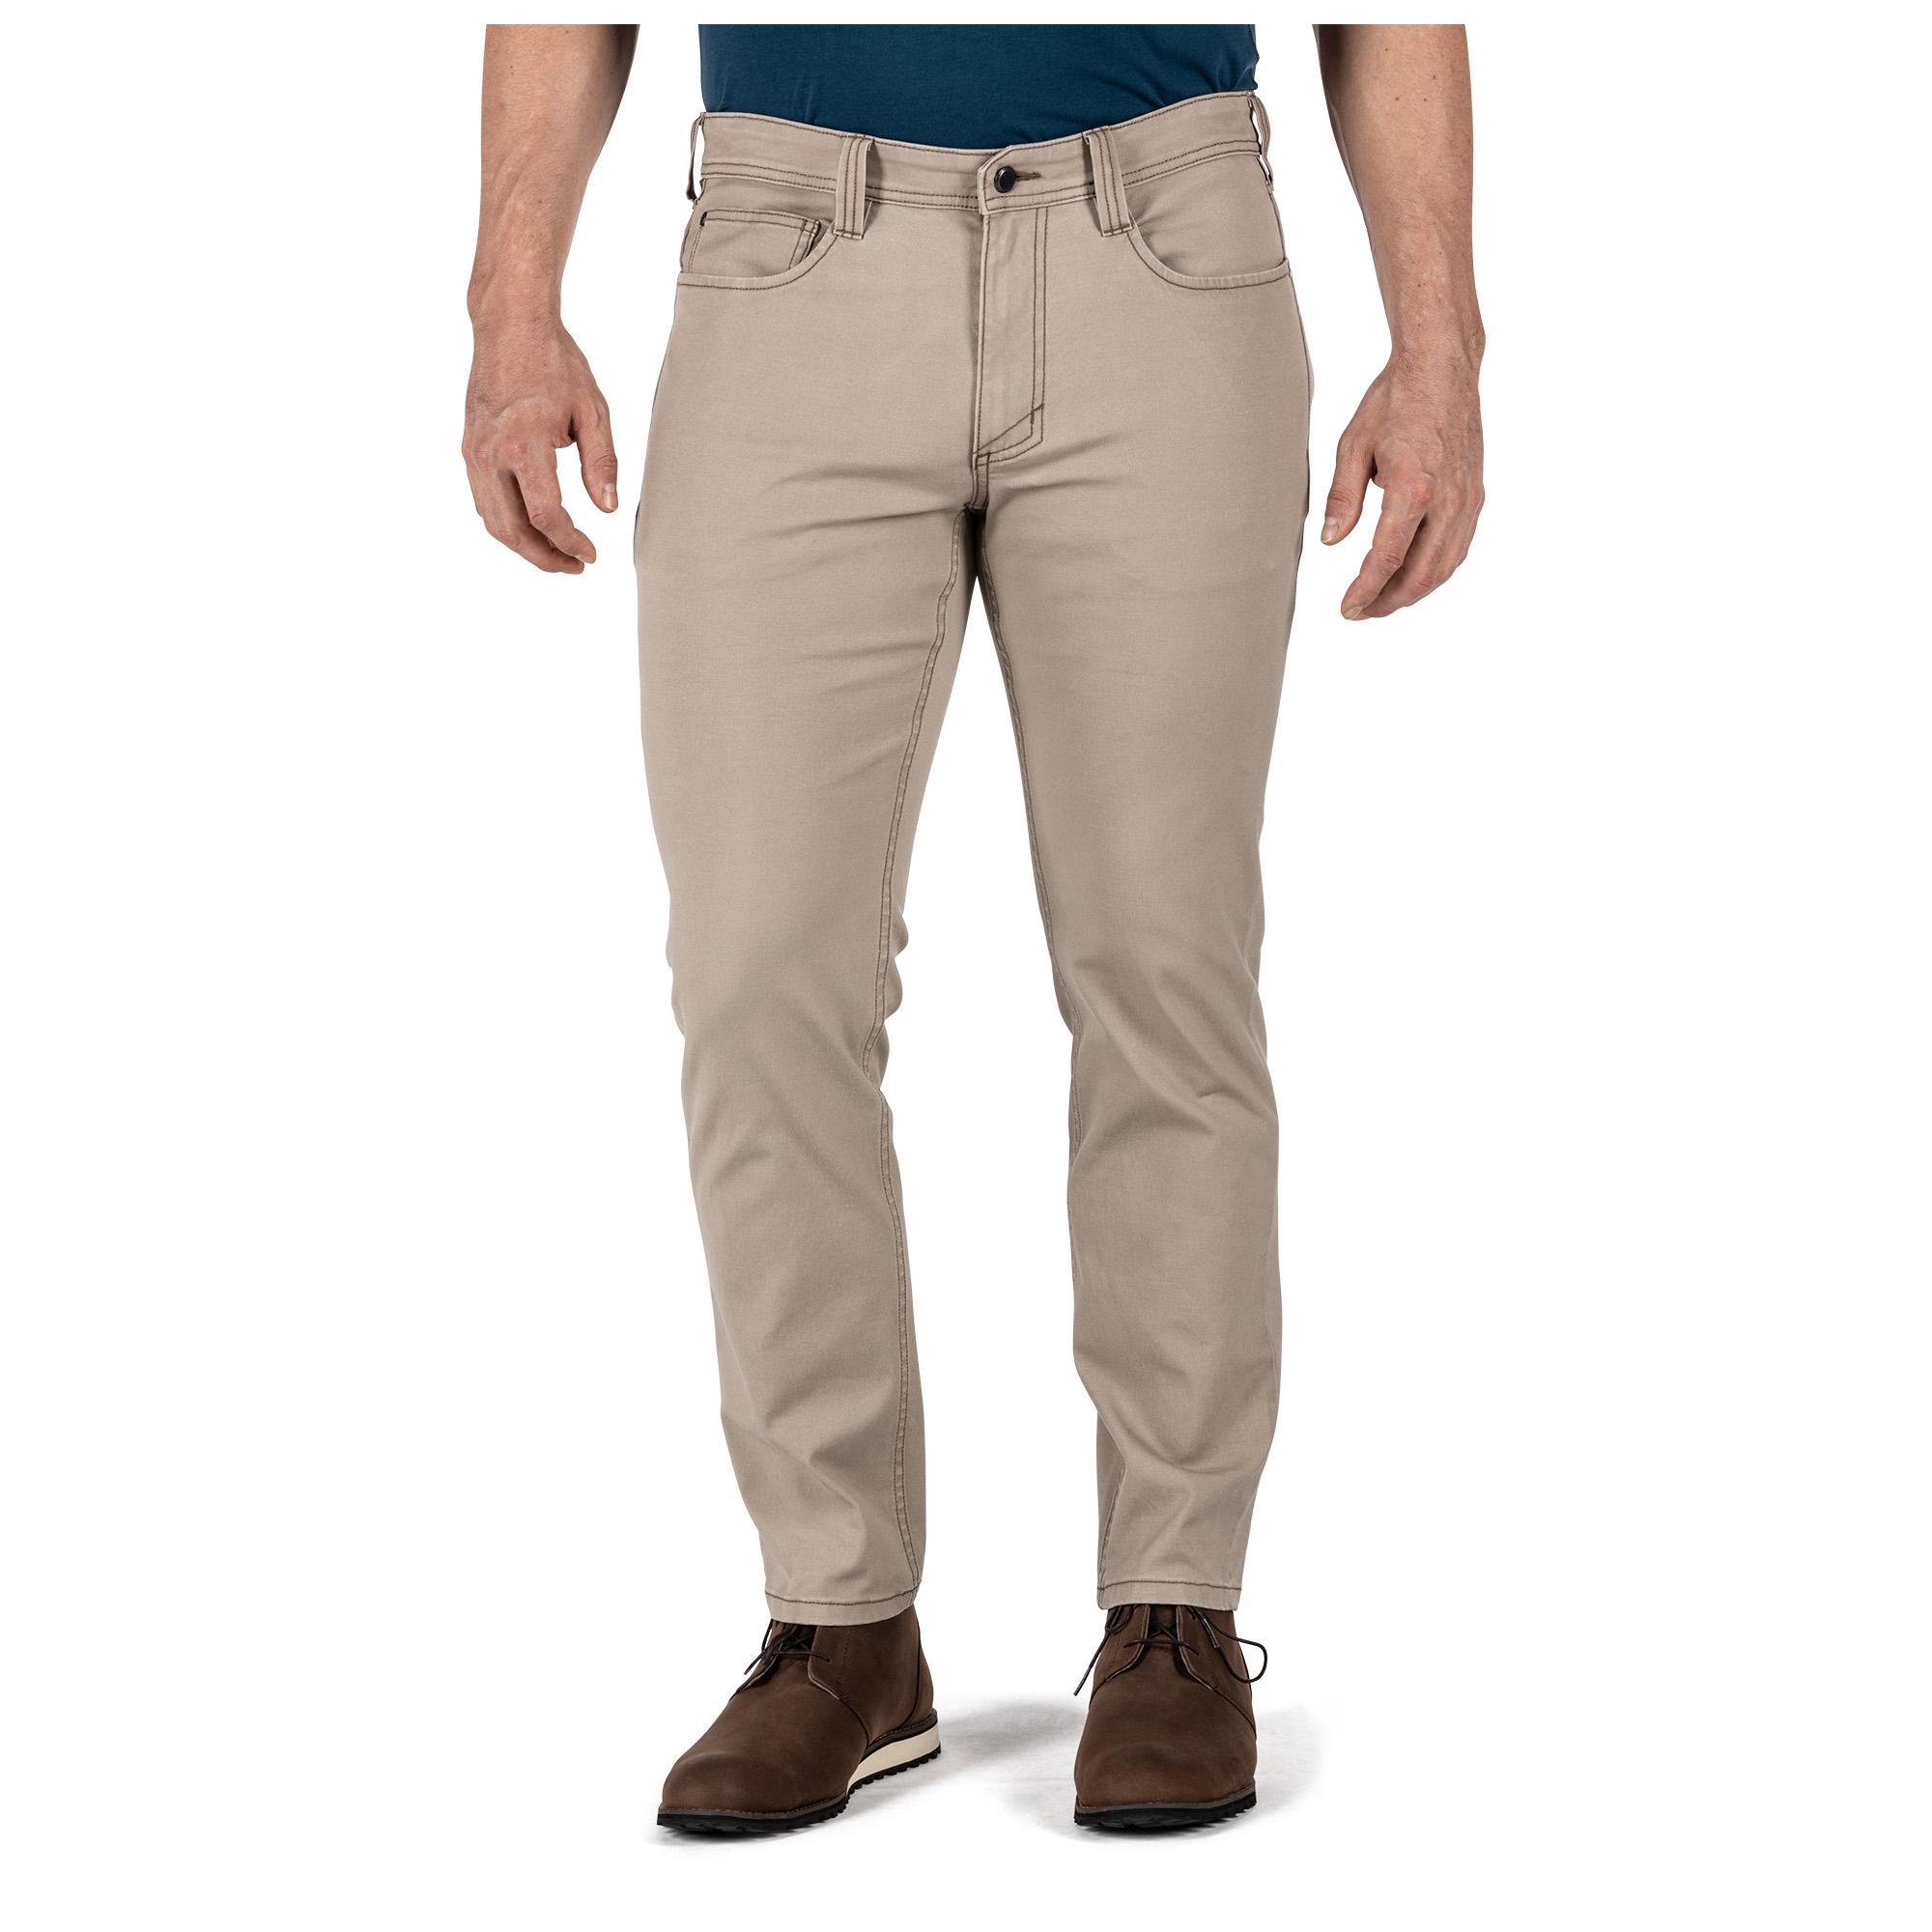 Defender-flex pant 2.0 - Pants & shorts